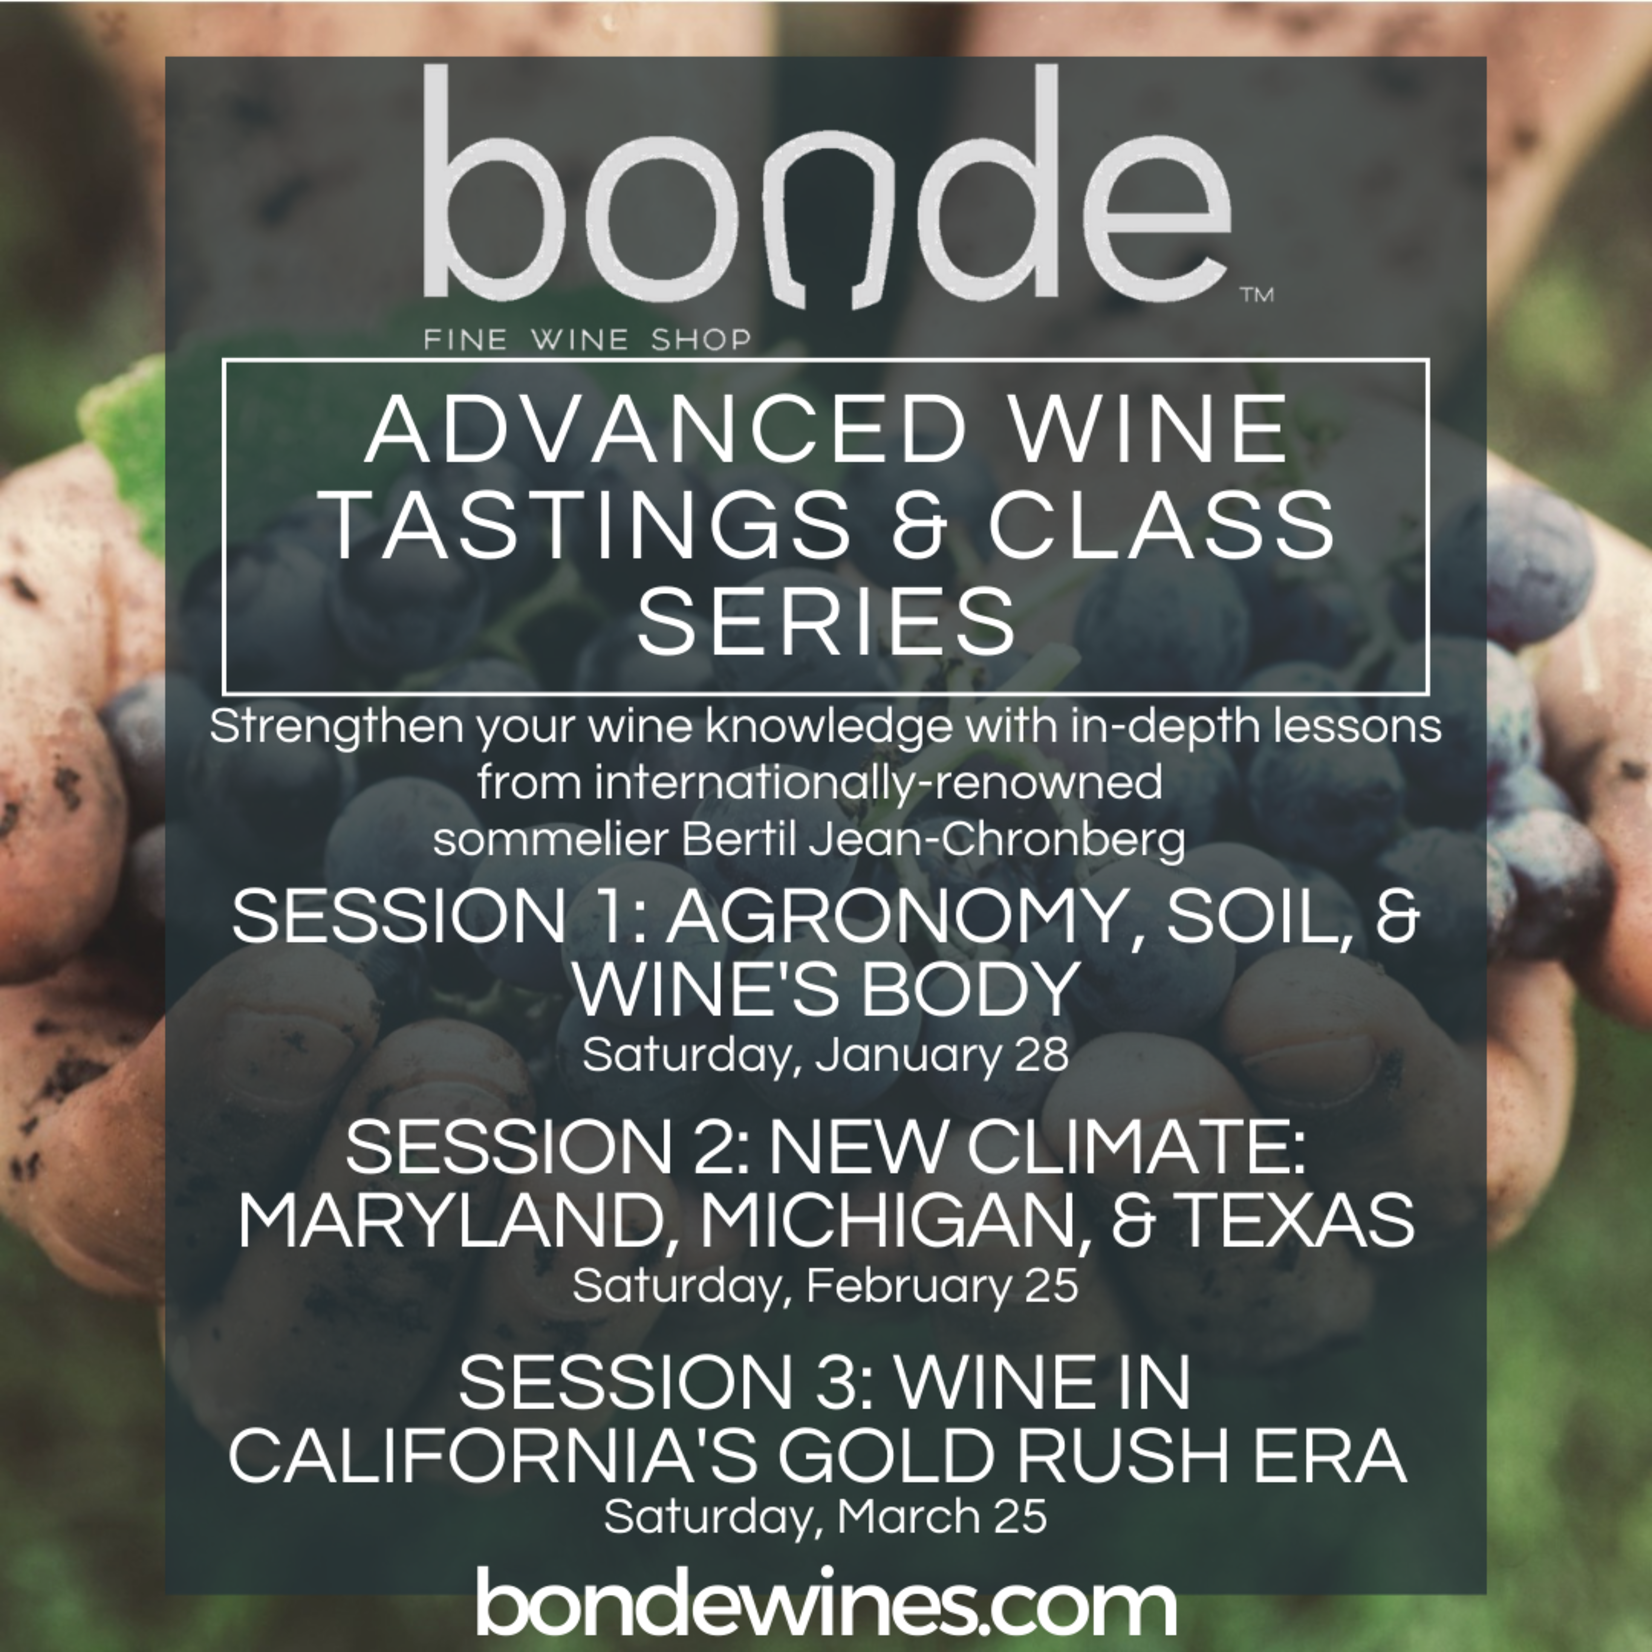 Saturday Advanced Wine Tasting & Class - Session 1: Agronomy, Soil, & Wine's Body - January 28, 7:00 - 9:00 p.m.